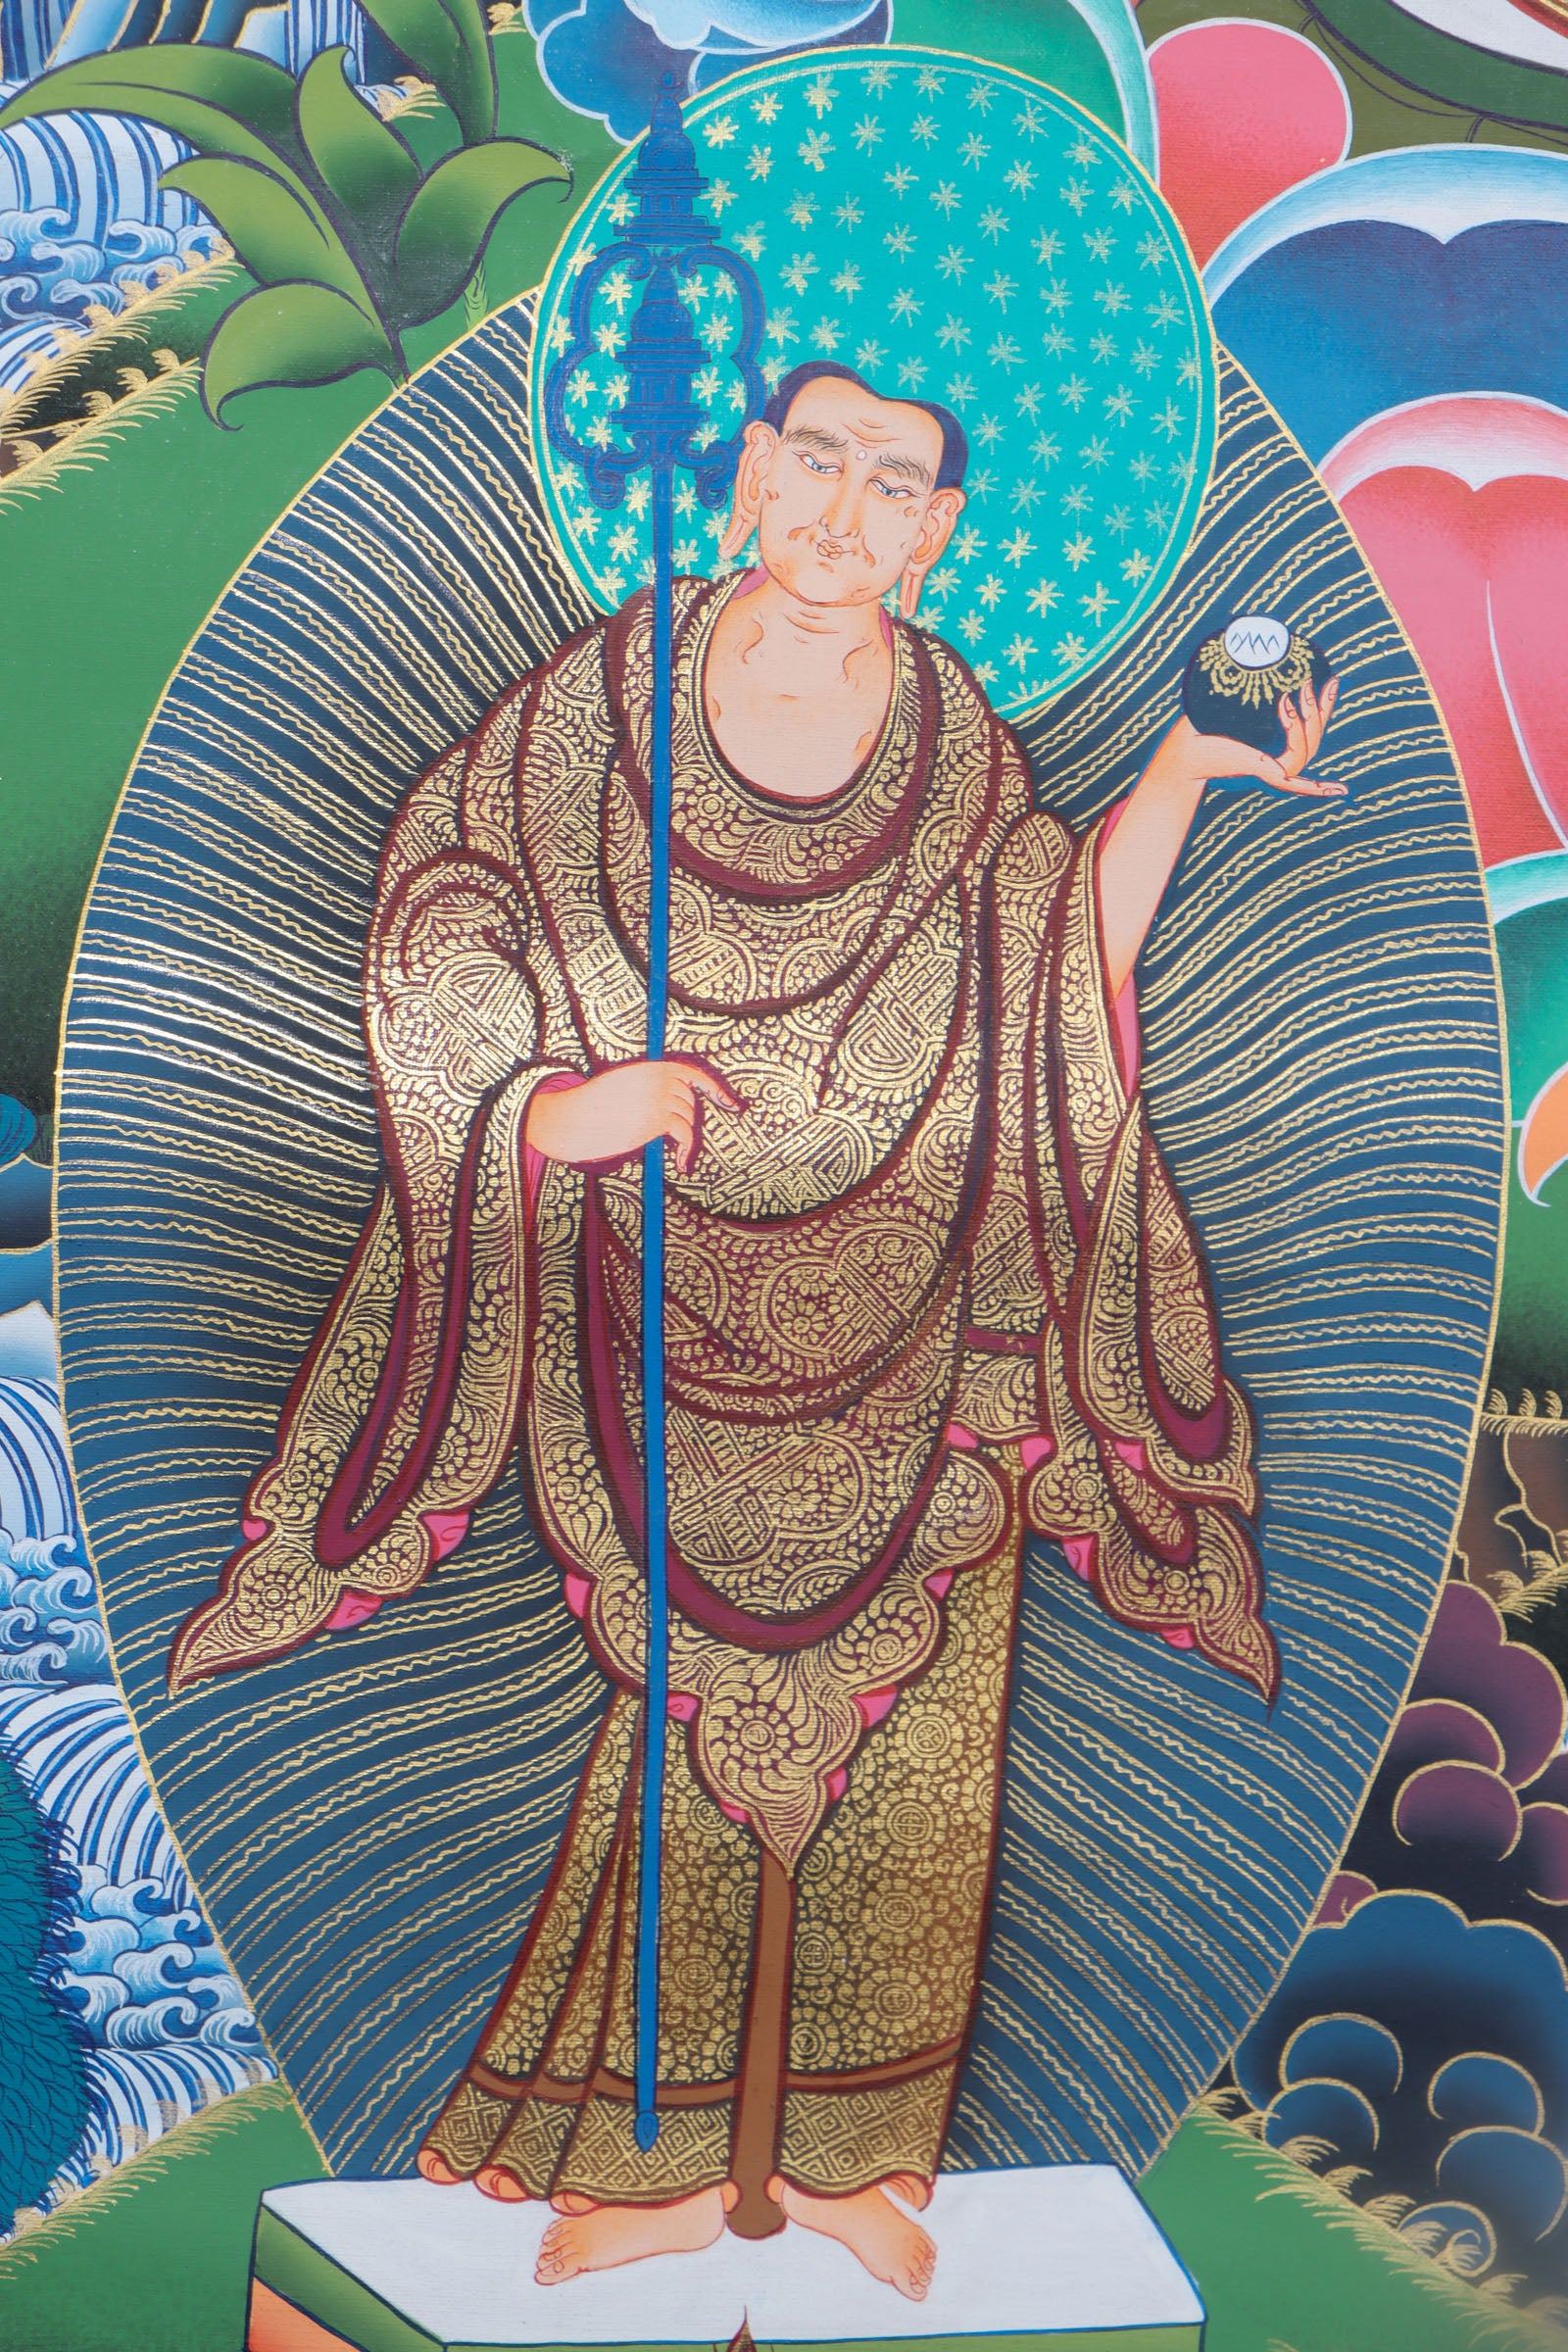 Shakyamuni Buddha Thangka Painting for Buddhism teaching.